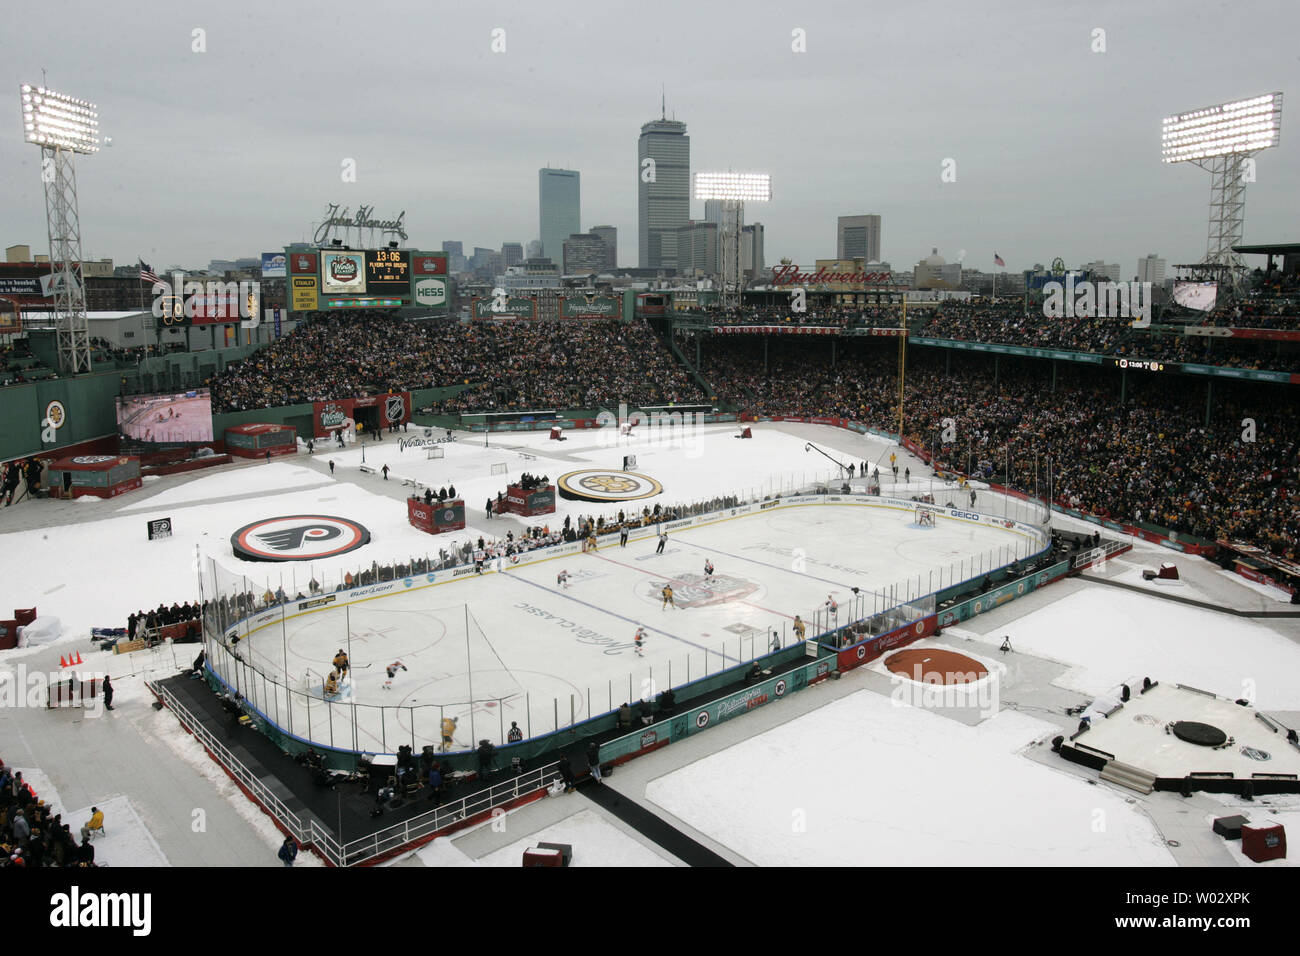 File:2010 NHL Winter Classic (4241921471) (cropped).jpg - Wikimedia Commons